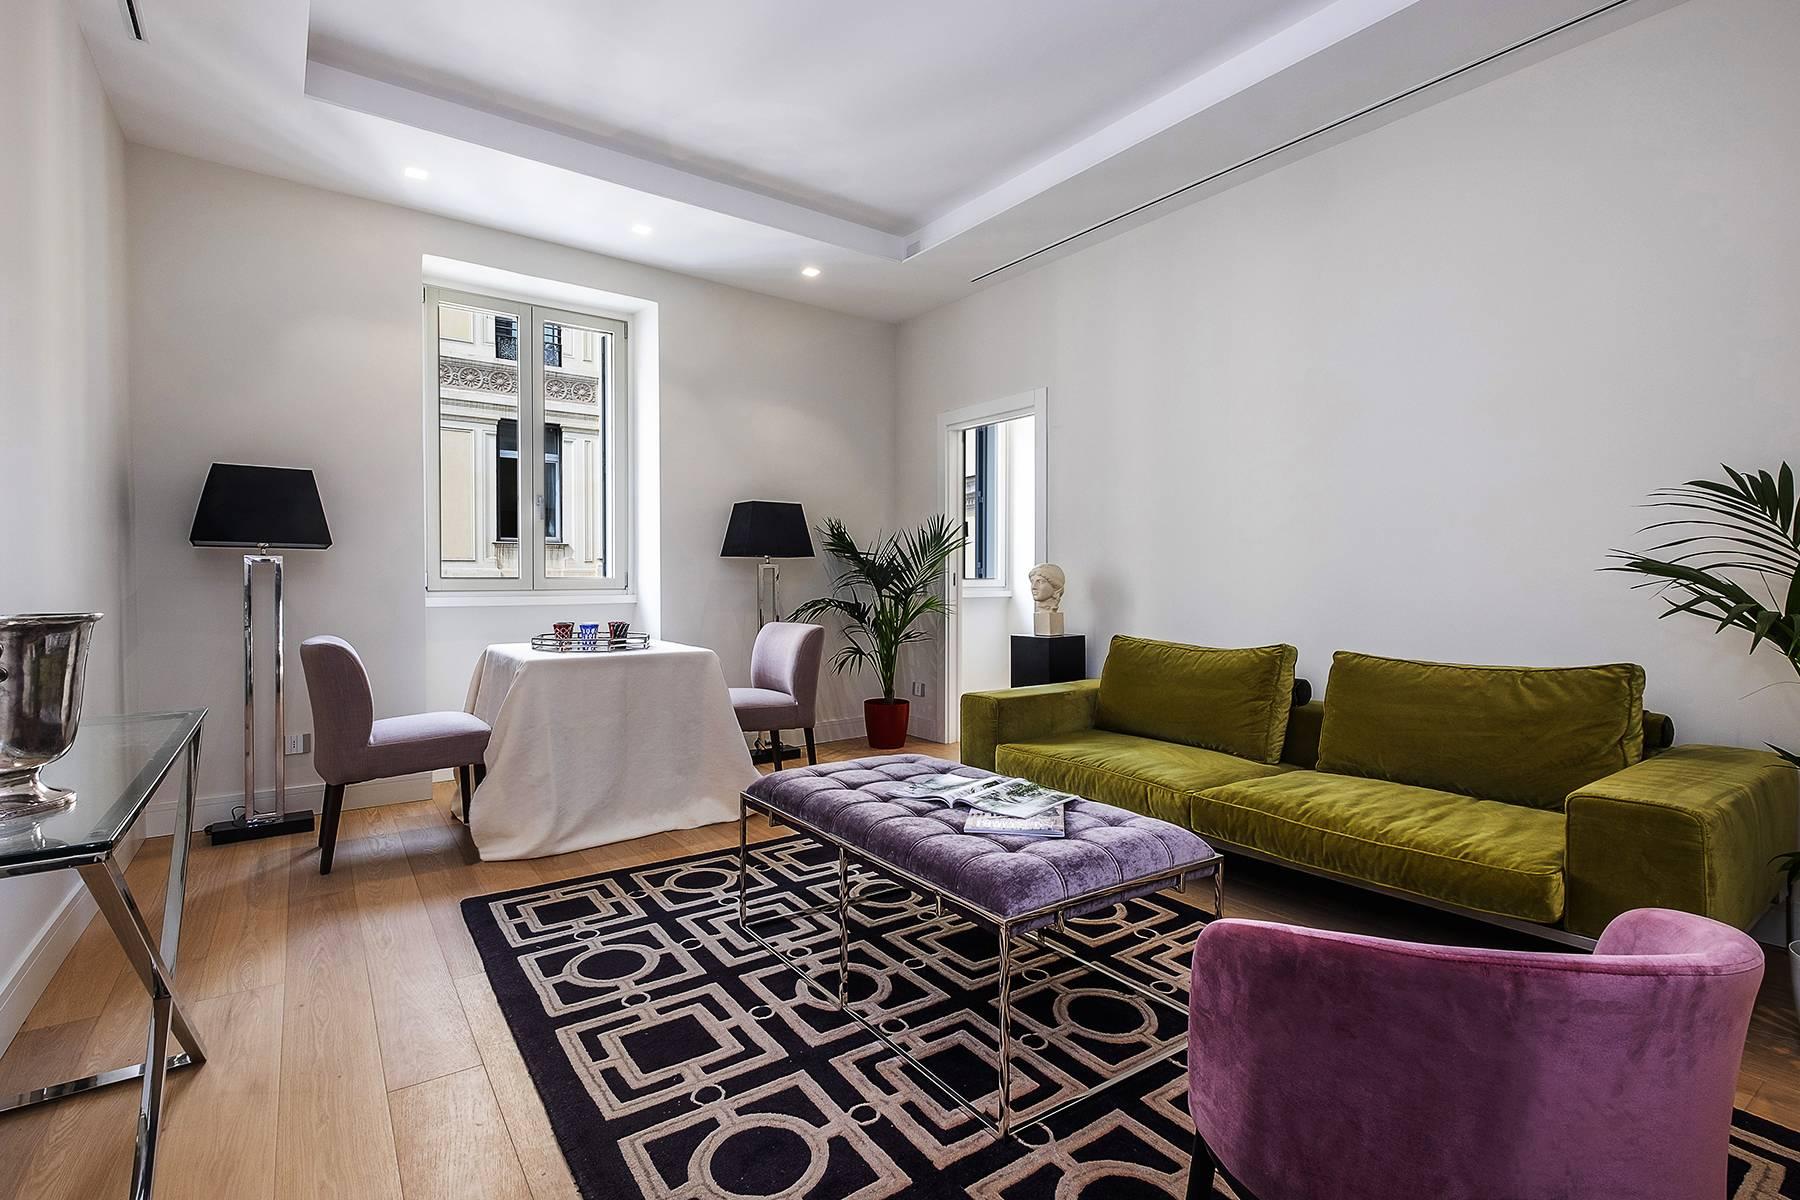 Spanish Steps luxury turnkey apartment - 2